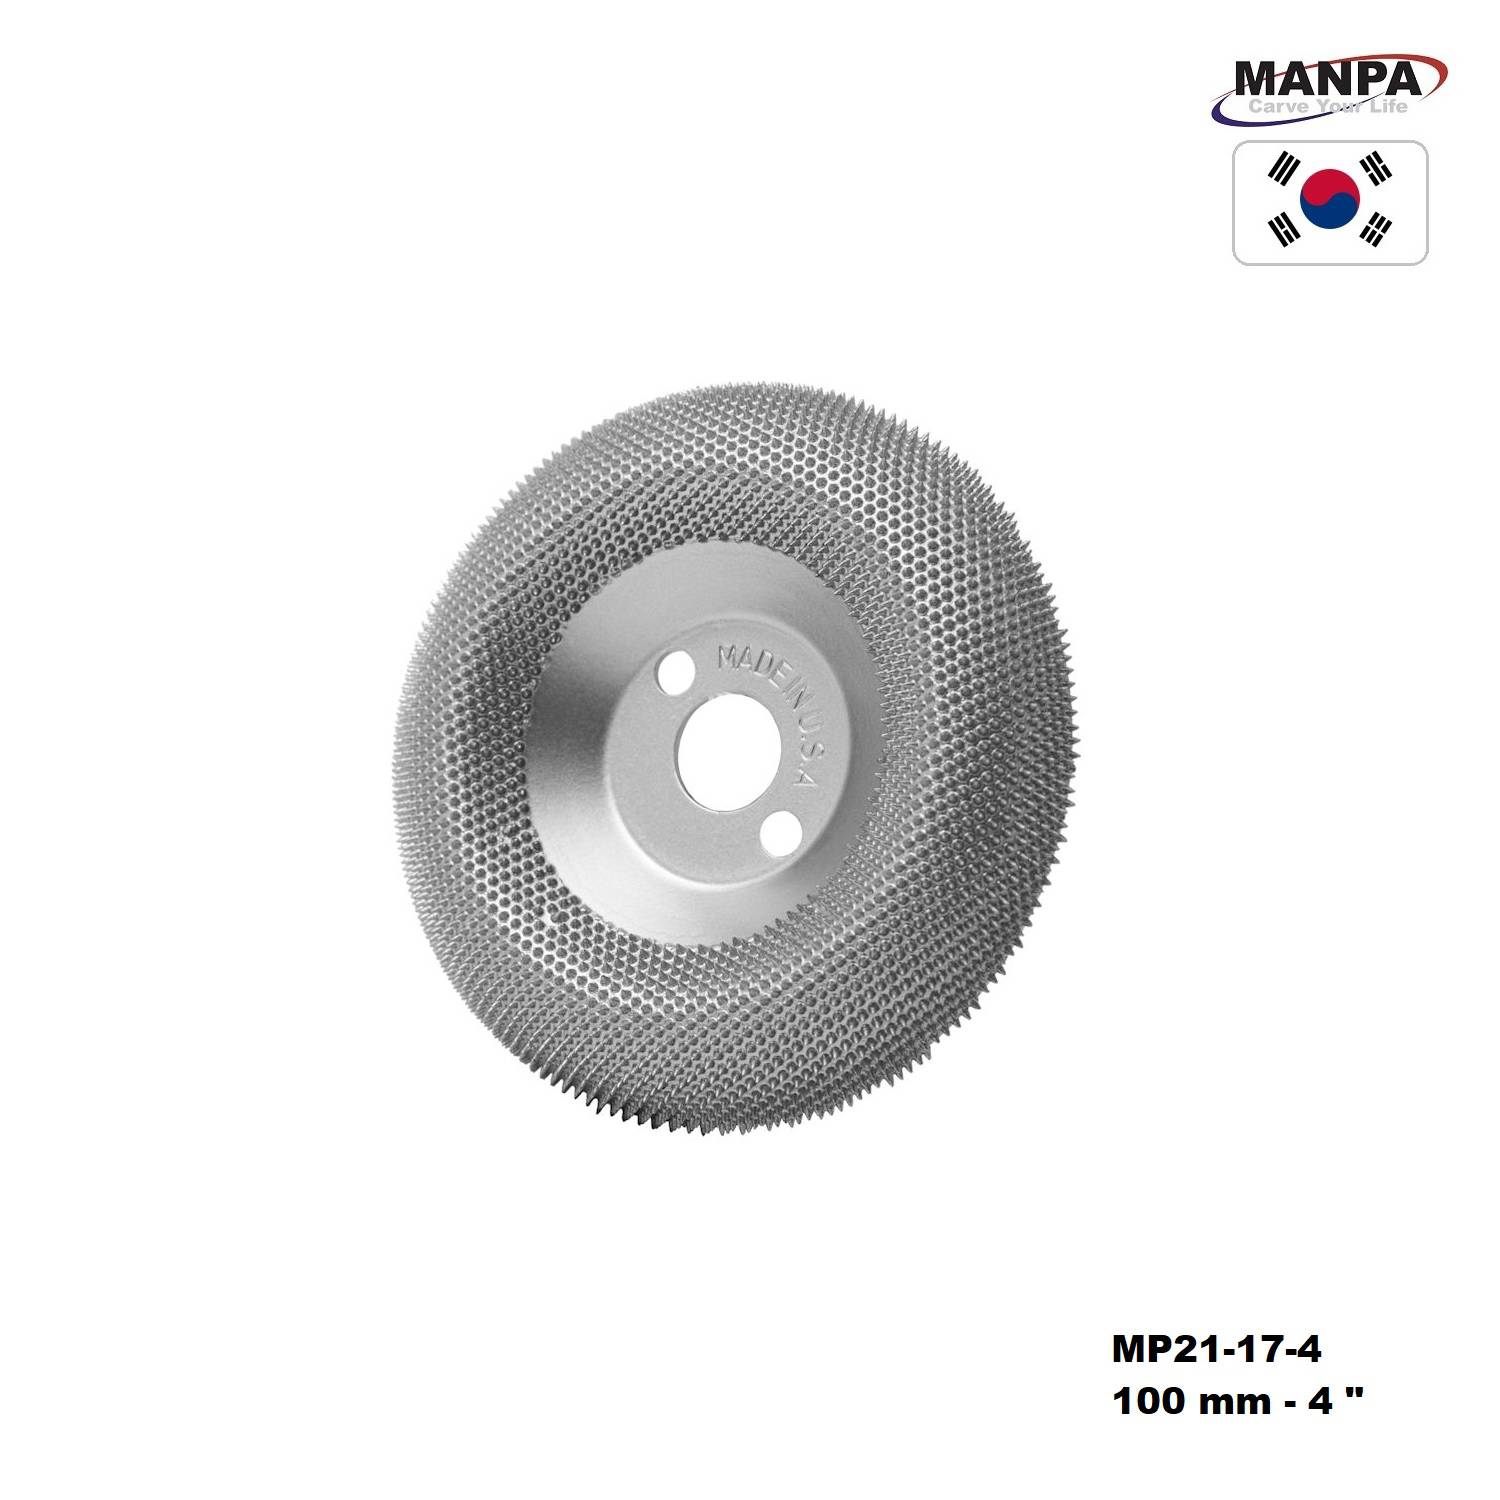 Manpa-Tools-MP21-17-4-raspschijf